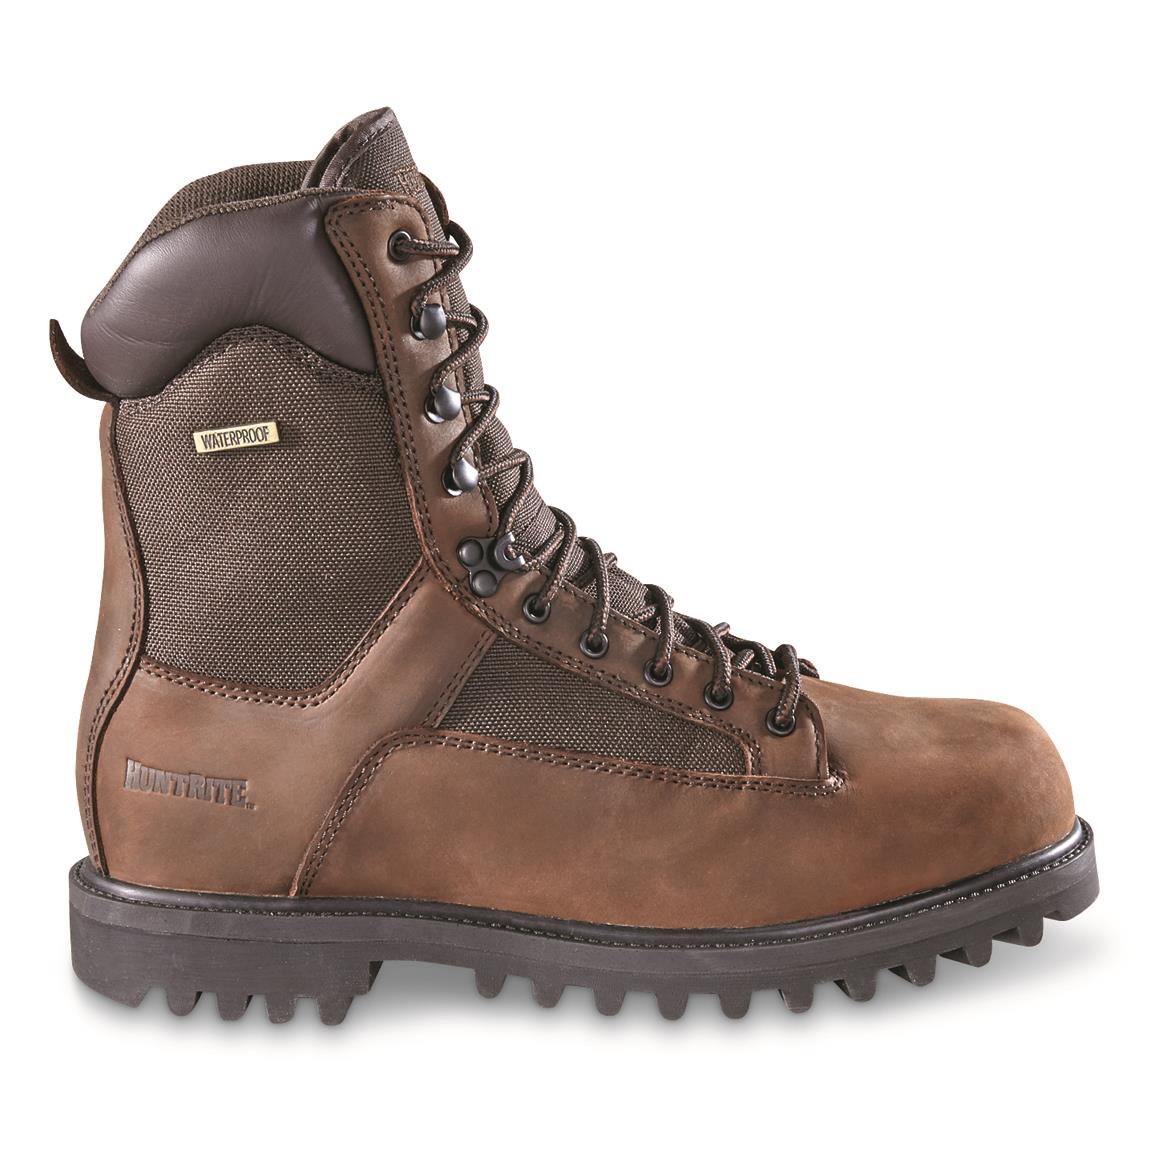 HuntRite Men's Insulated Waterproof Hunting Boots, 400-gram - 704099 ...